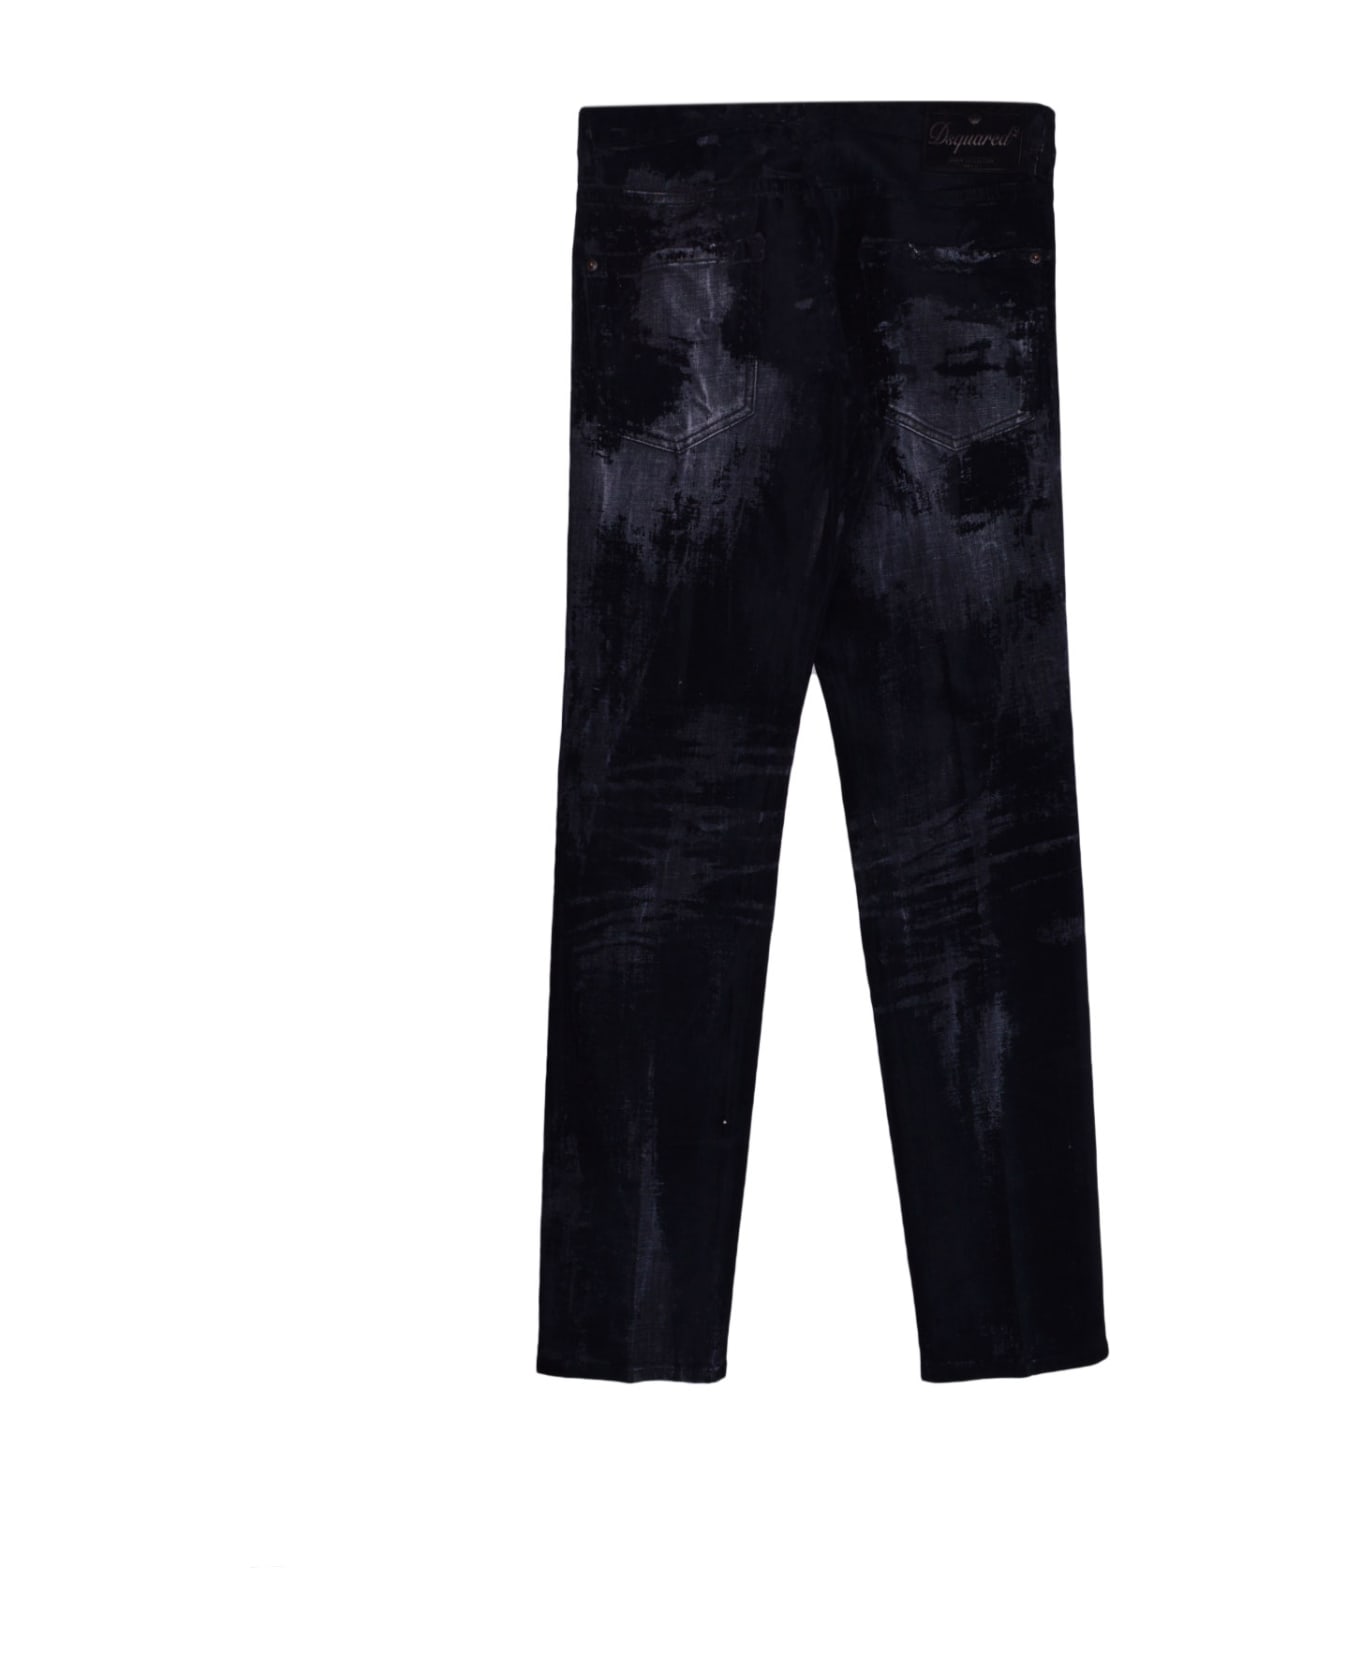 Dsquared2 Distressed Skinny Jeans - Black